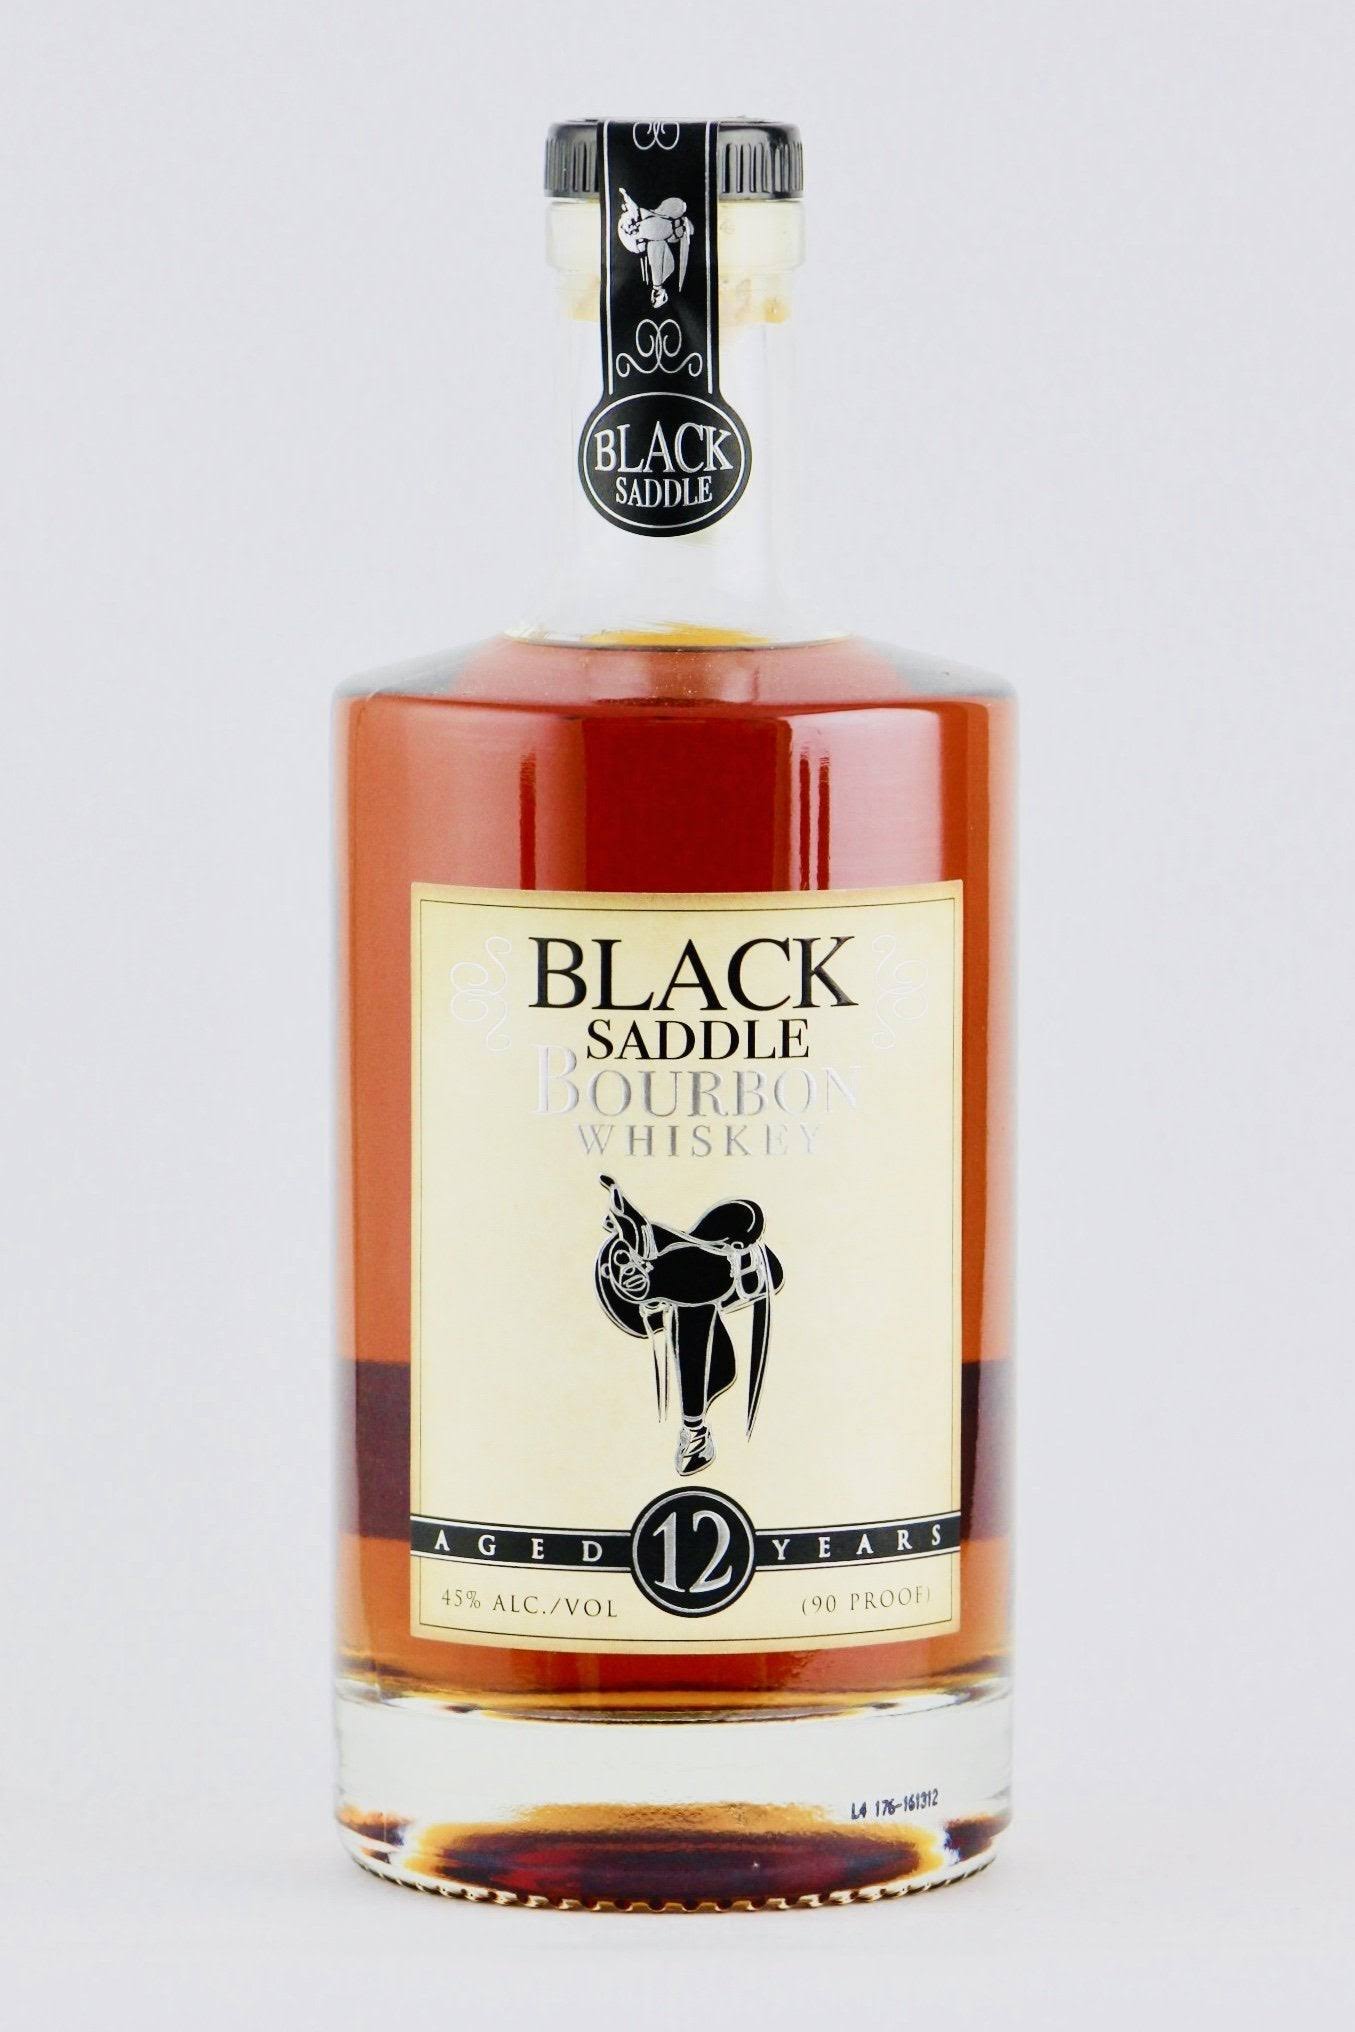 Black Saddle 12 Year Old Bourbon Kentucky Straight Bourbon Whiskey